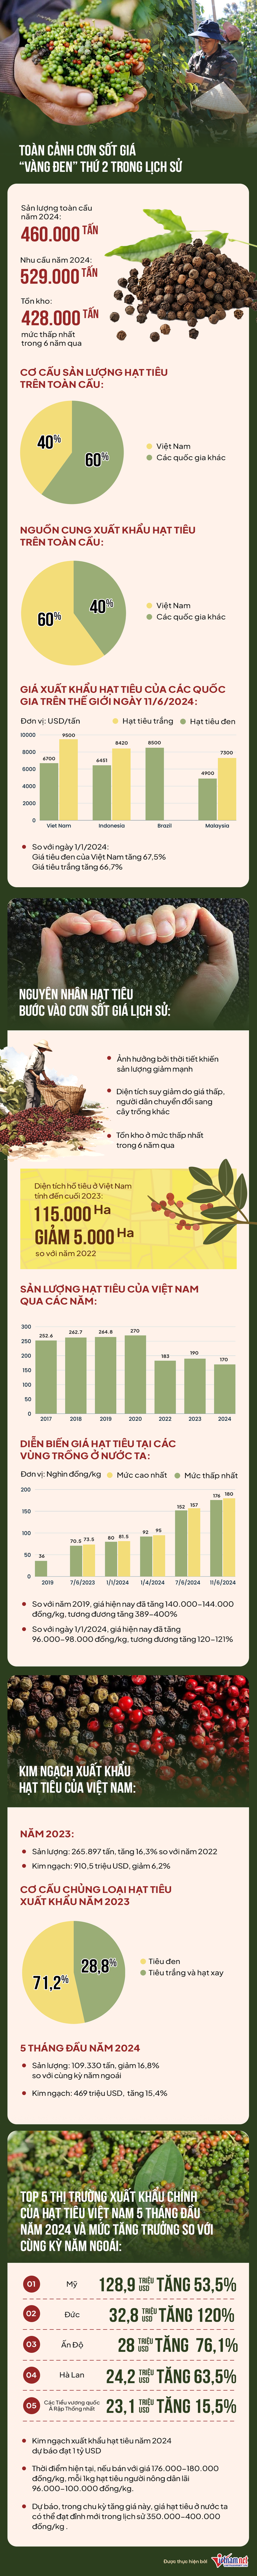 Gia “vang den” tang cao, Viet Nam co kho hang lon nhat the gioi  ​